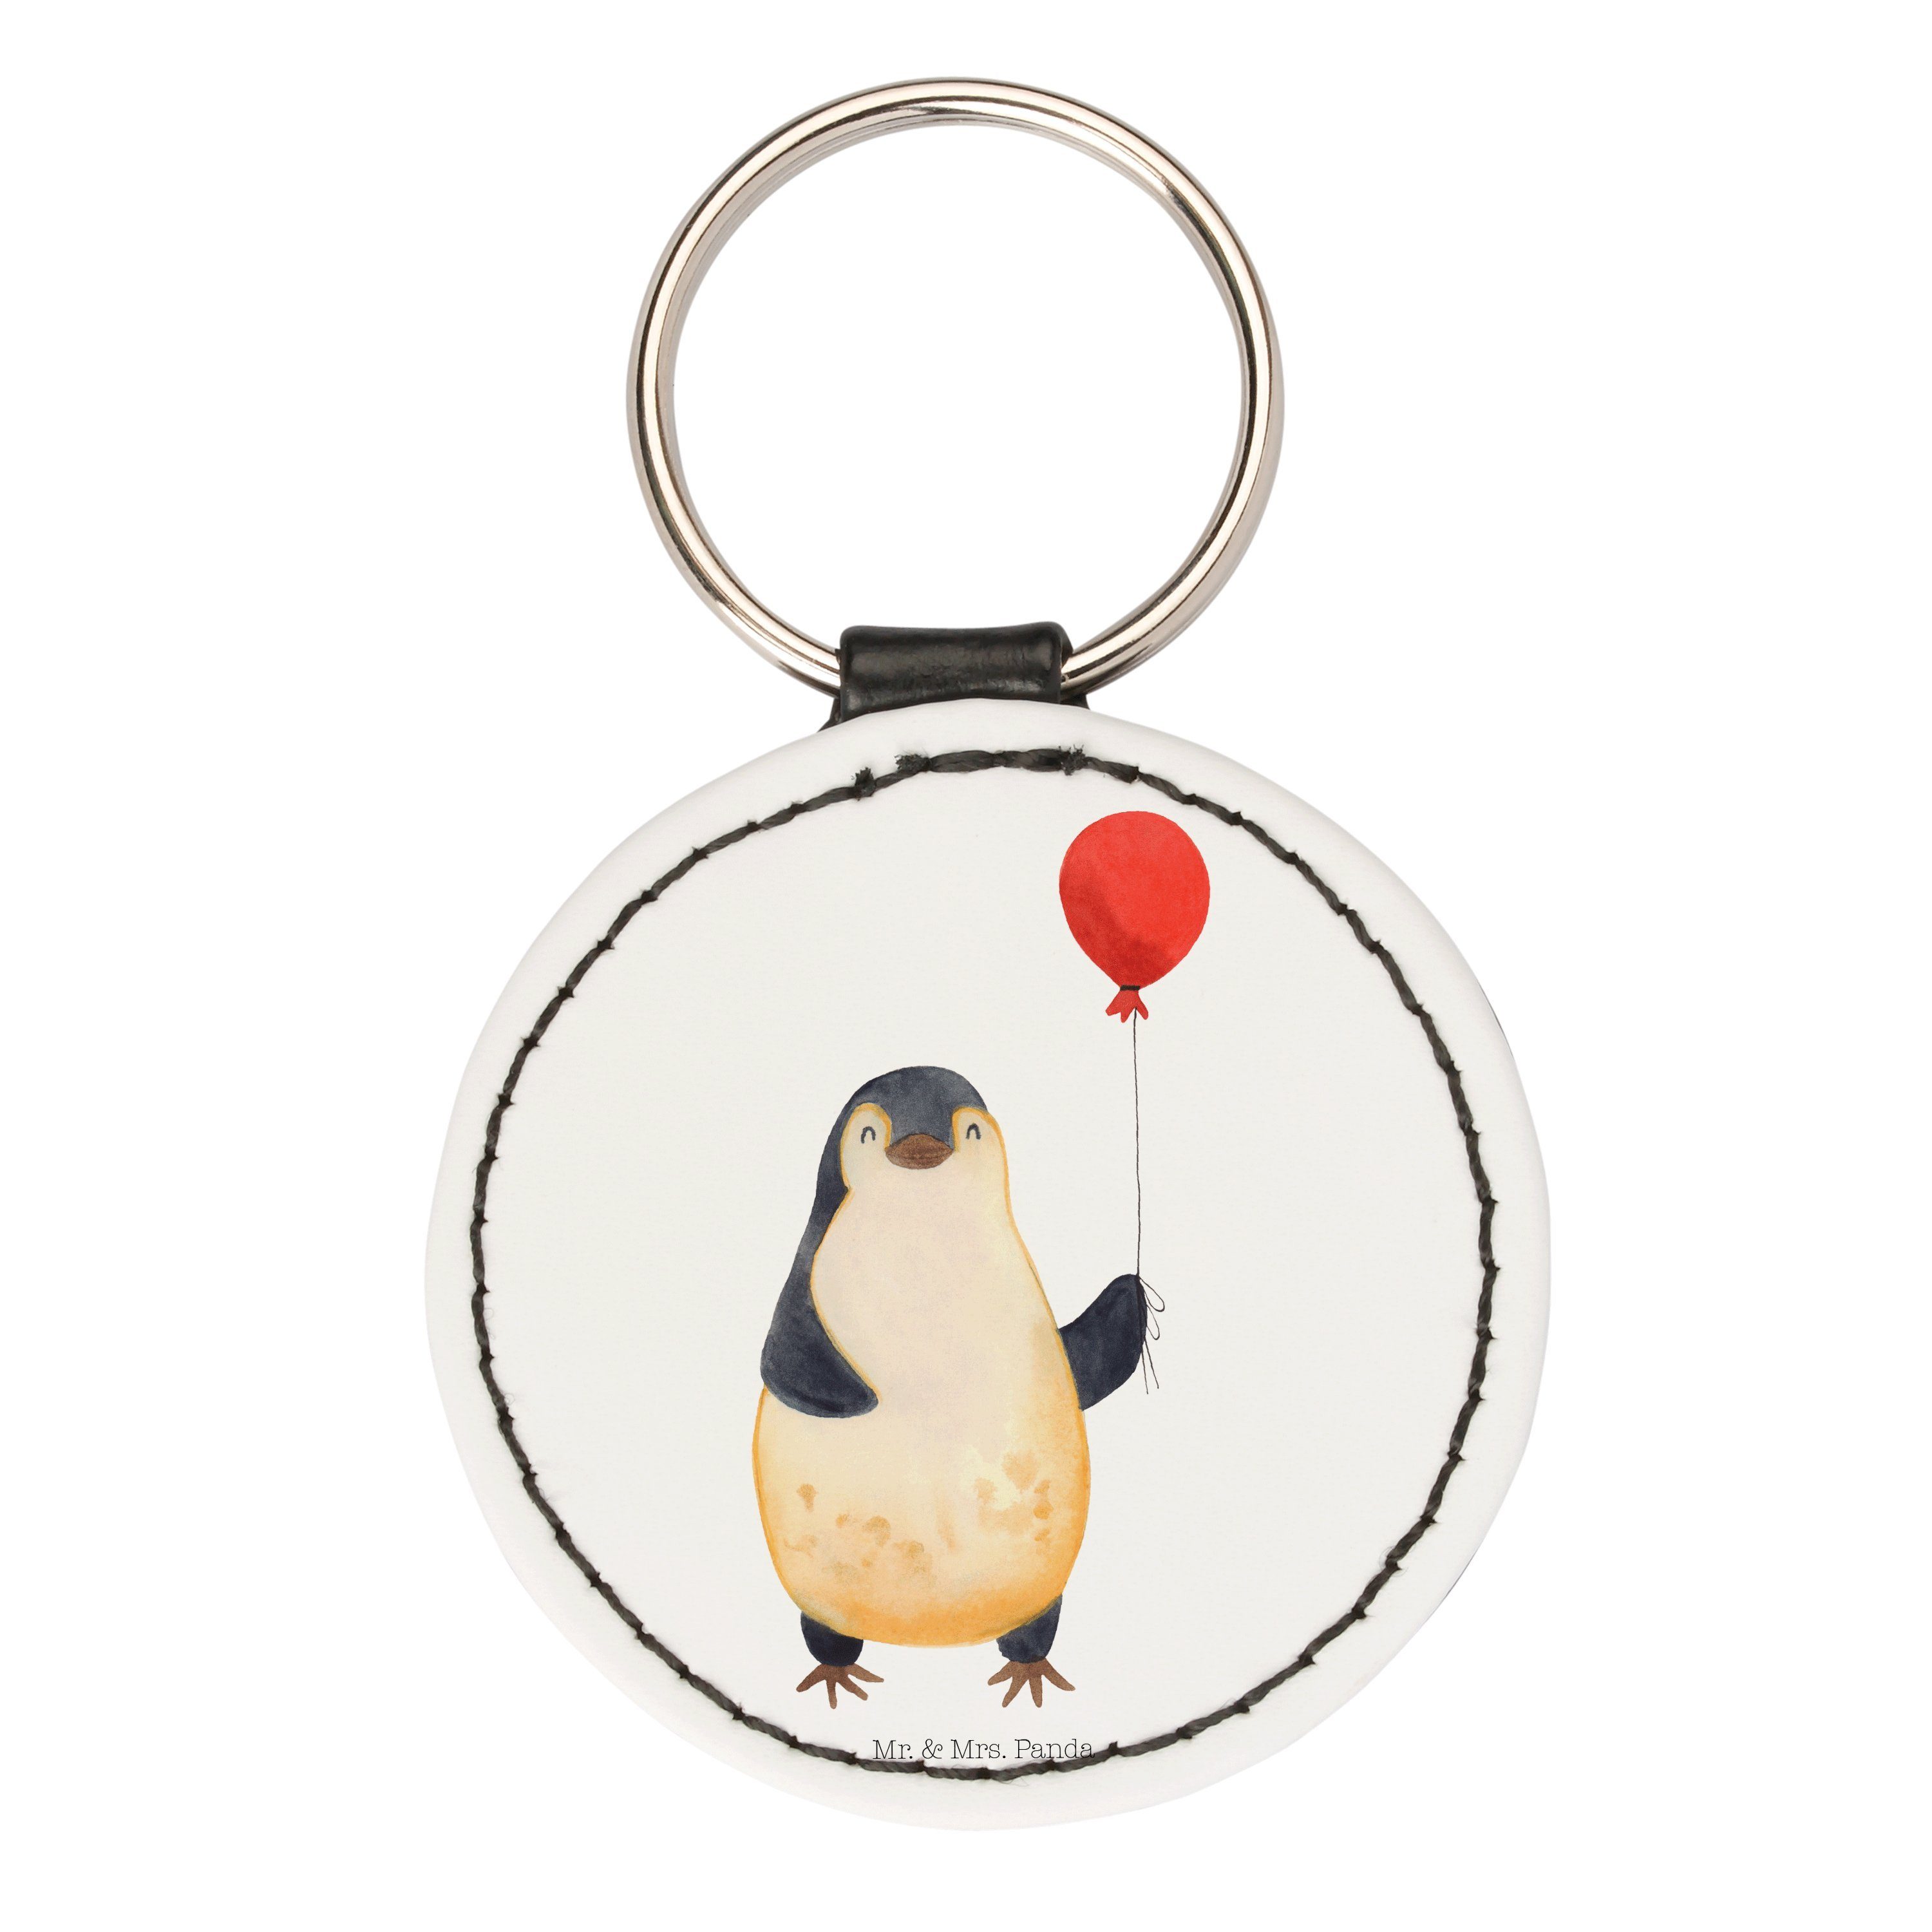 Mr. & Mrs. Panda Schlüsselanhänger Pinguin Luftballon - Weiß - Geschenk, Motivation, Anhänger, Kind, Tas (1-tlg)